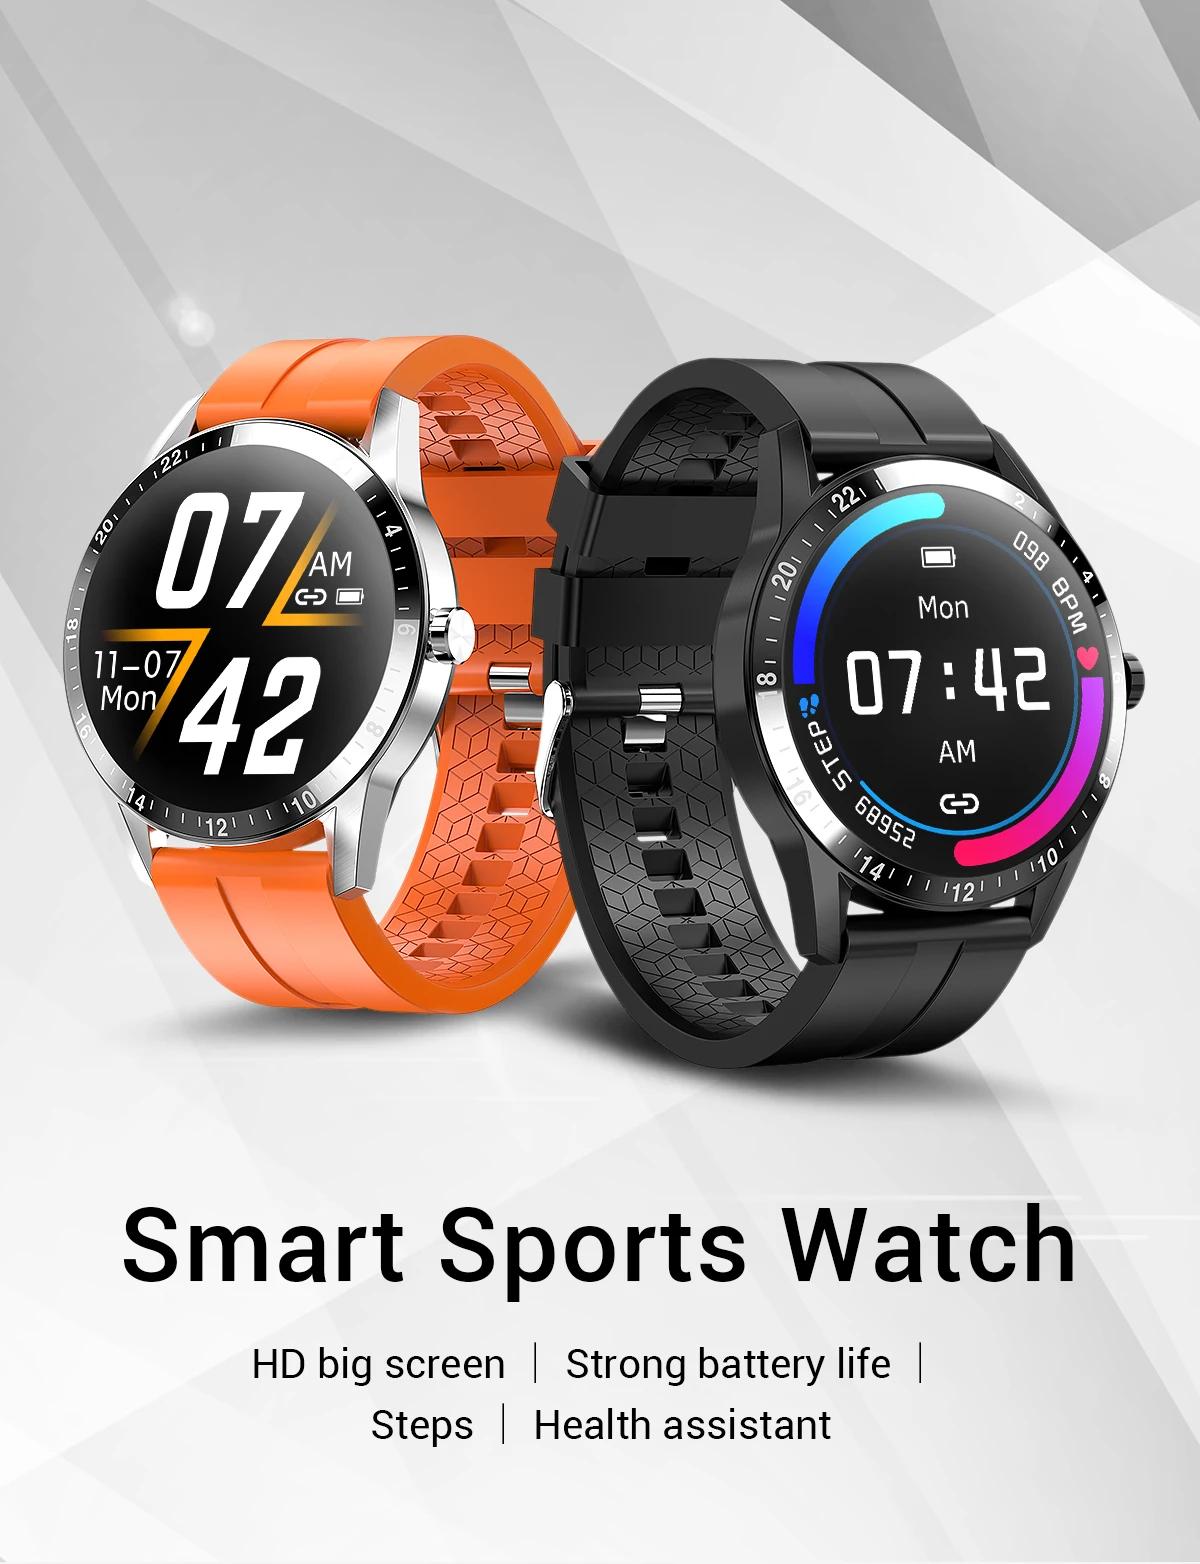 kor Uanset hvilken Kilauea Mountain Wholesale G20 Smartwatch Phone Call Smart Watch Bracelet Message Push  Fitness Tracker Smartwatch From m.alibaba.com